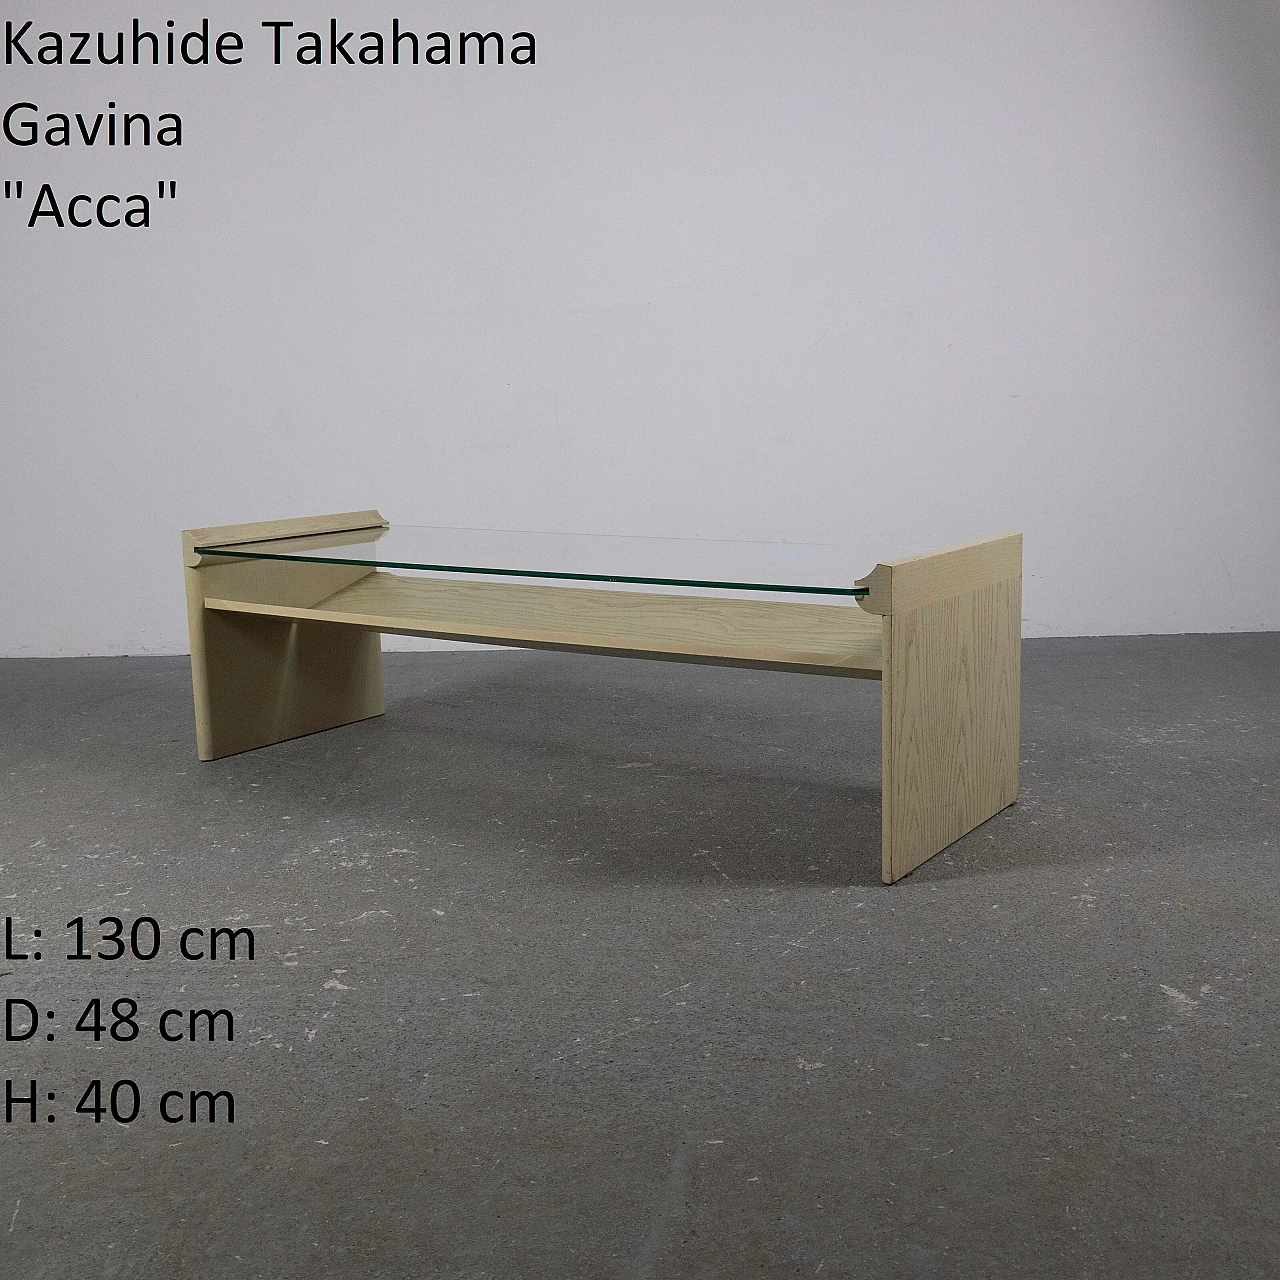 Acca coffee table by Kazuhide Takahama for Gavina, 1960s 2